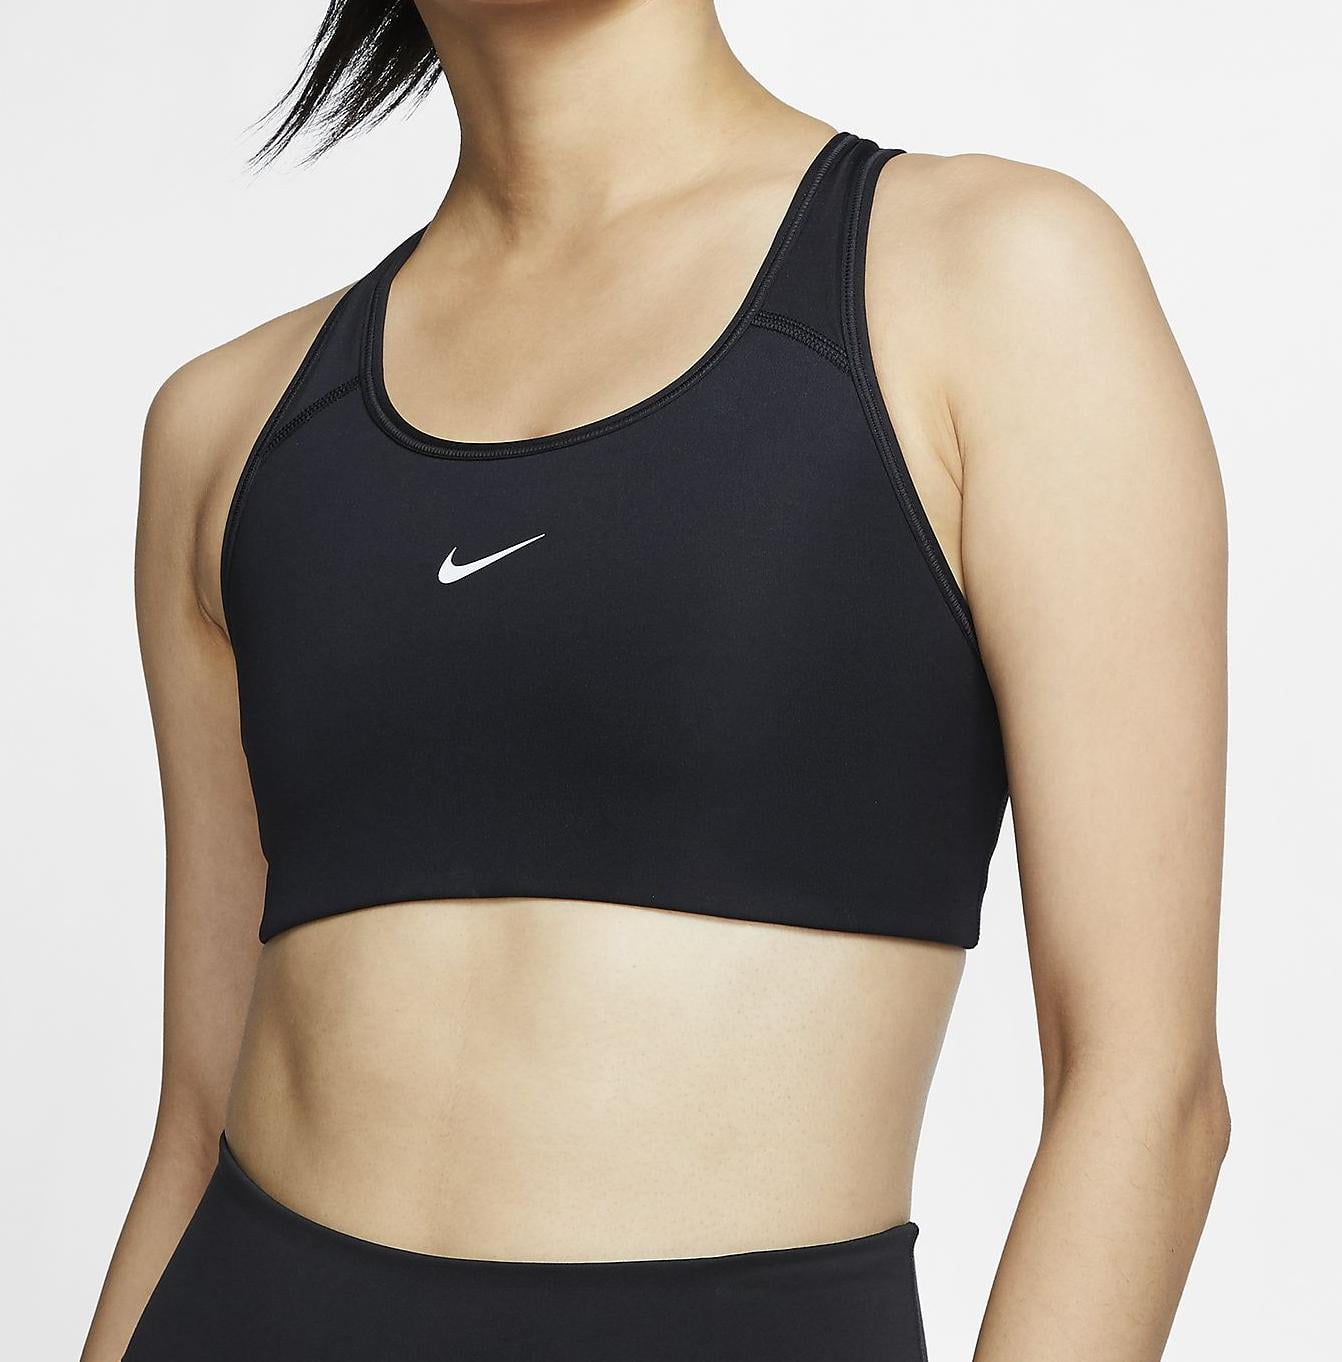 Nike Women's Padded Sports Bras Black Size Small 